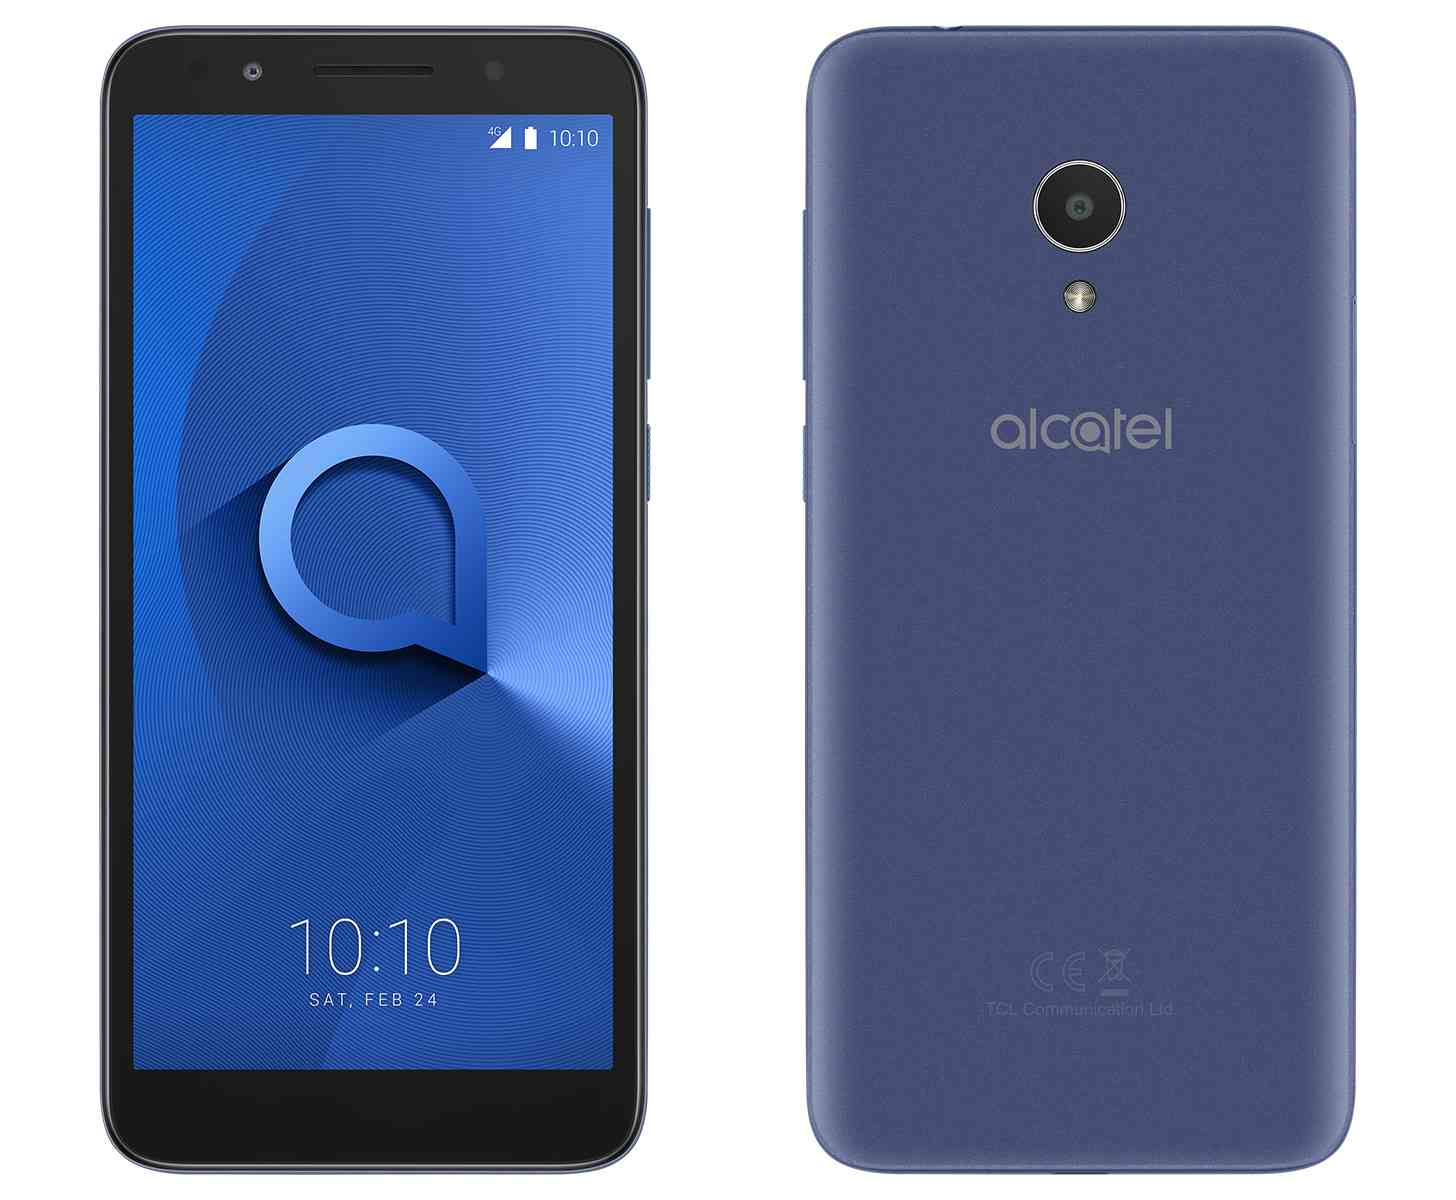 Alcatel 1X Android Go phone